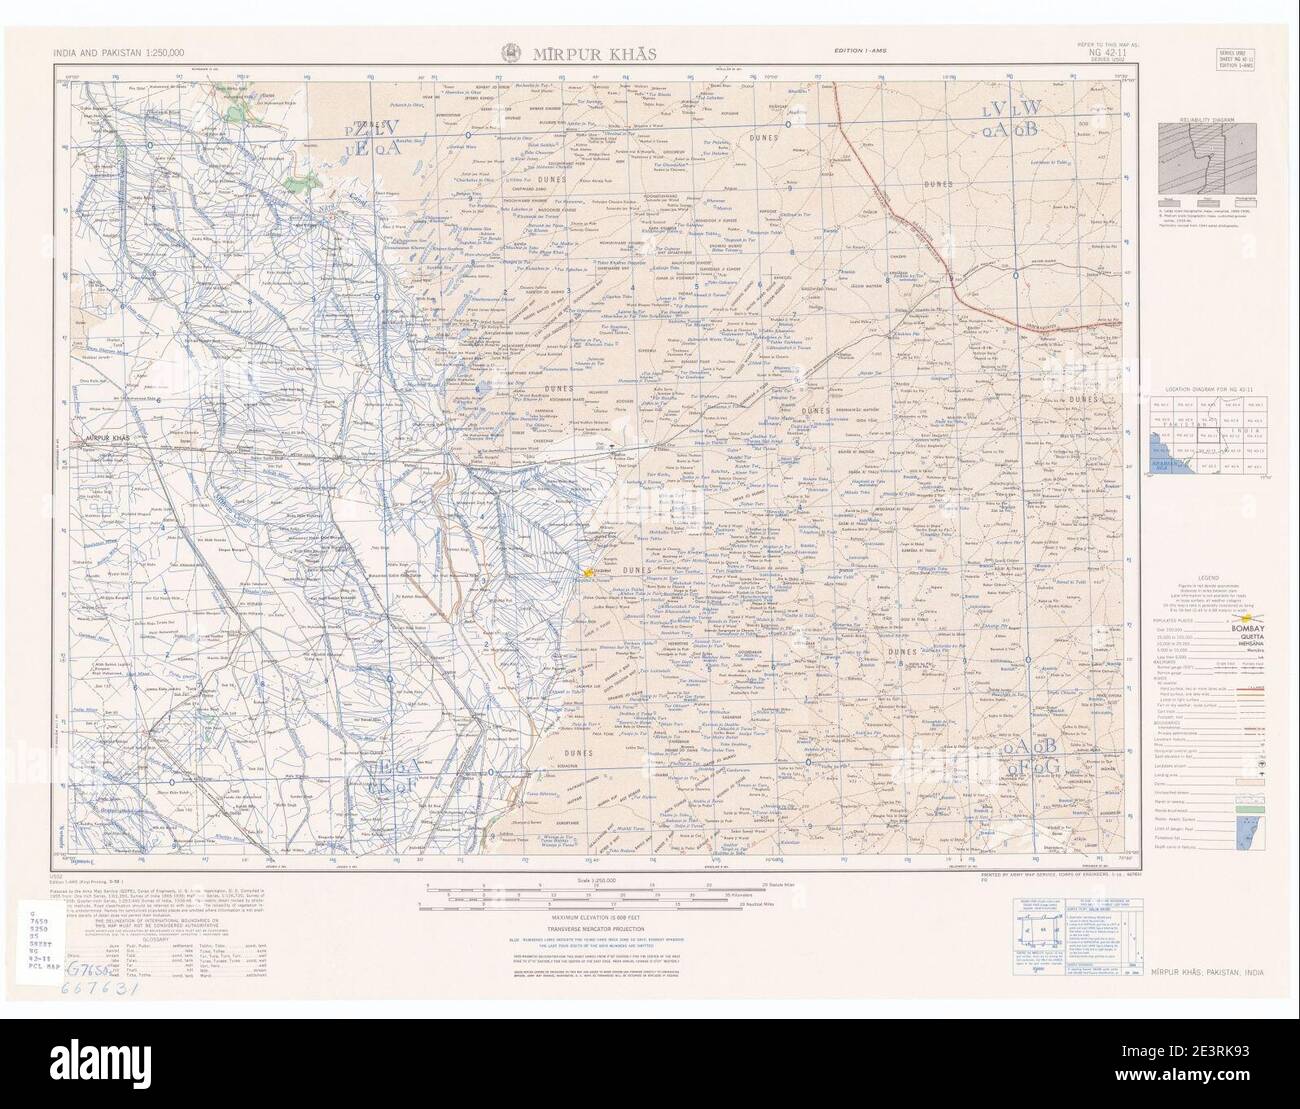 Mapa India y Pakistán 1-250,000 Tile NG 42-11 Mirpur Khas. Foto de stock